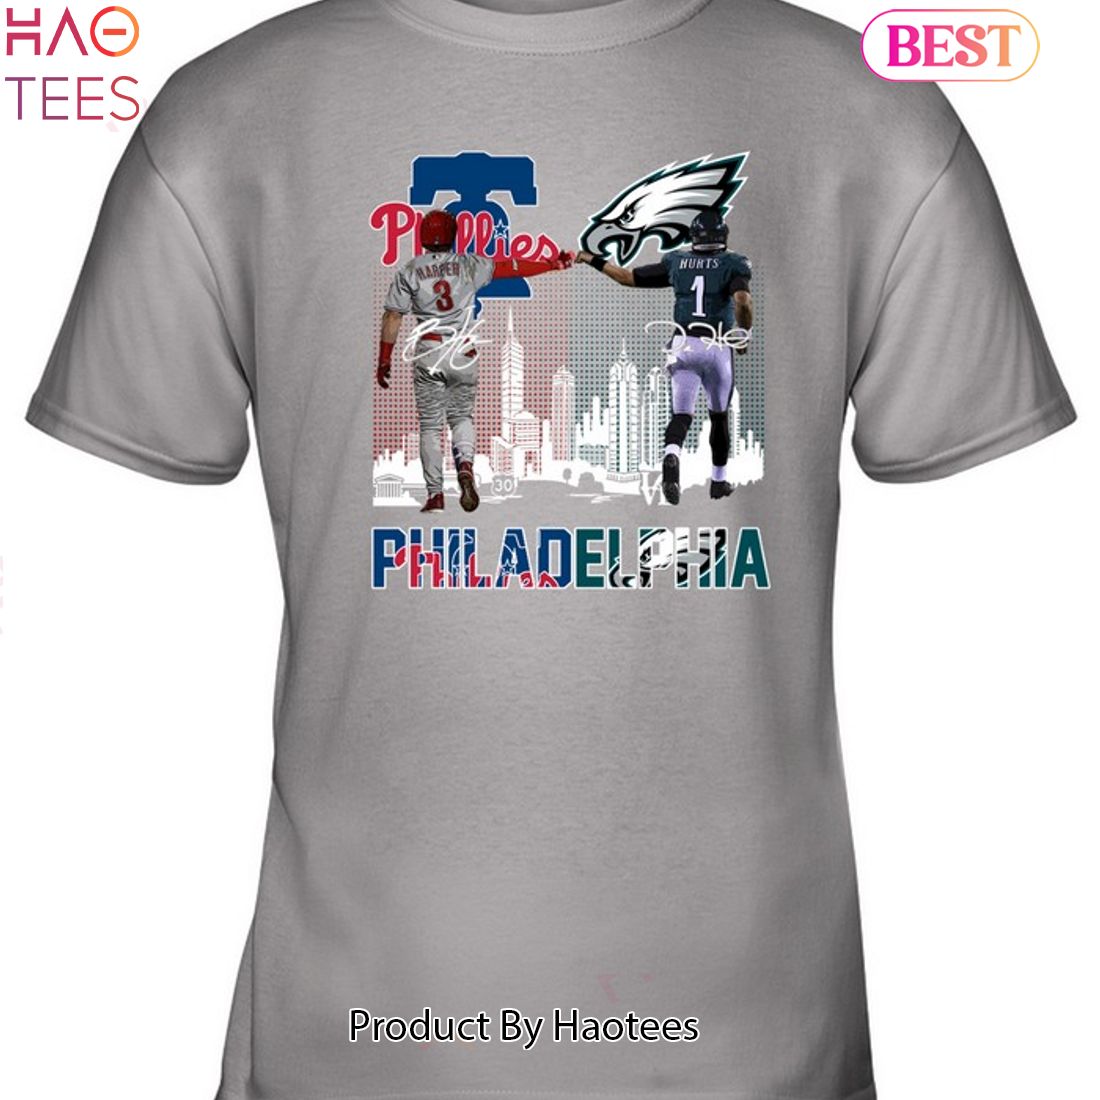 HOT FASHION Philadelphia Phillies And Philadelphia Eagles Champion